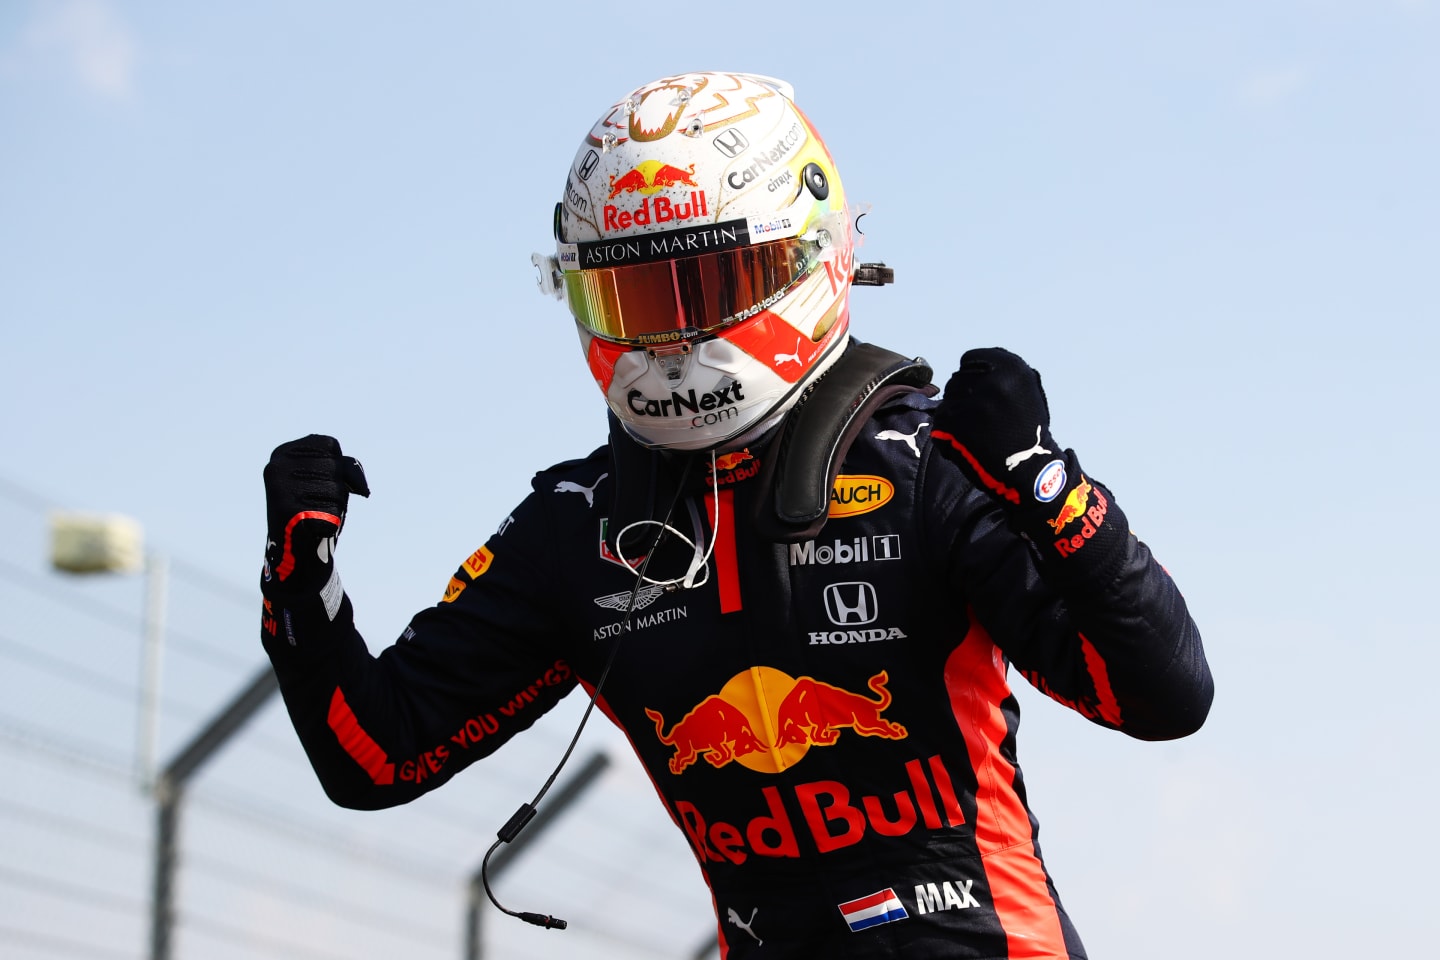 NORTHAMPTON, ENGLAND - AUGUST 09: Race winner Max Verstappen of Netherlands and Red Bull Racing